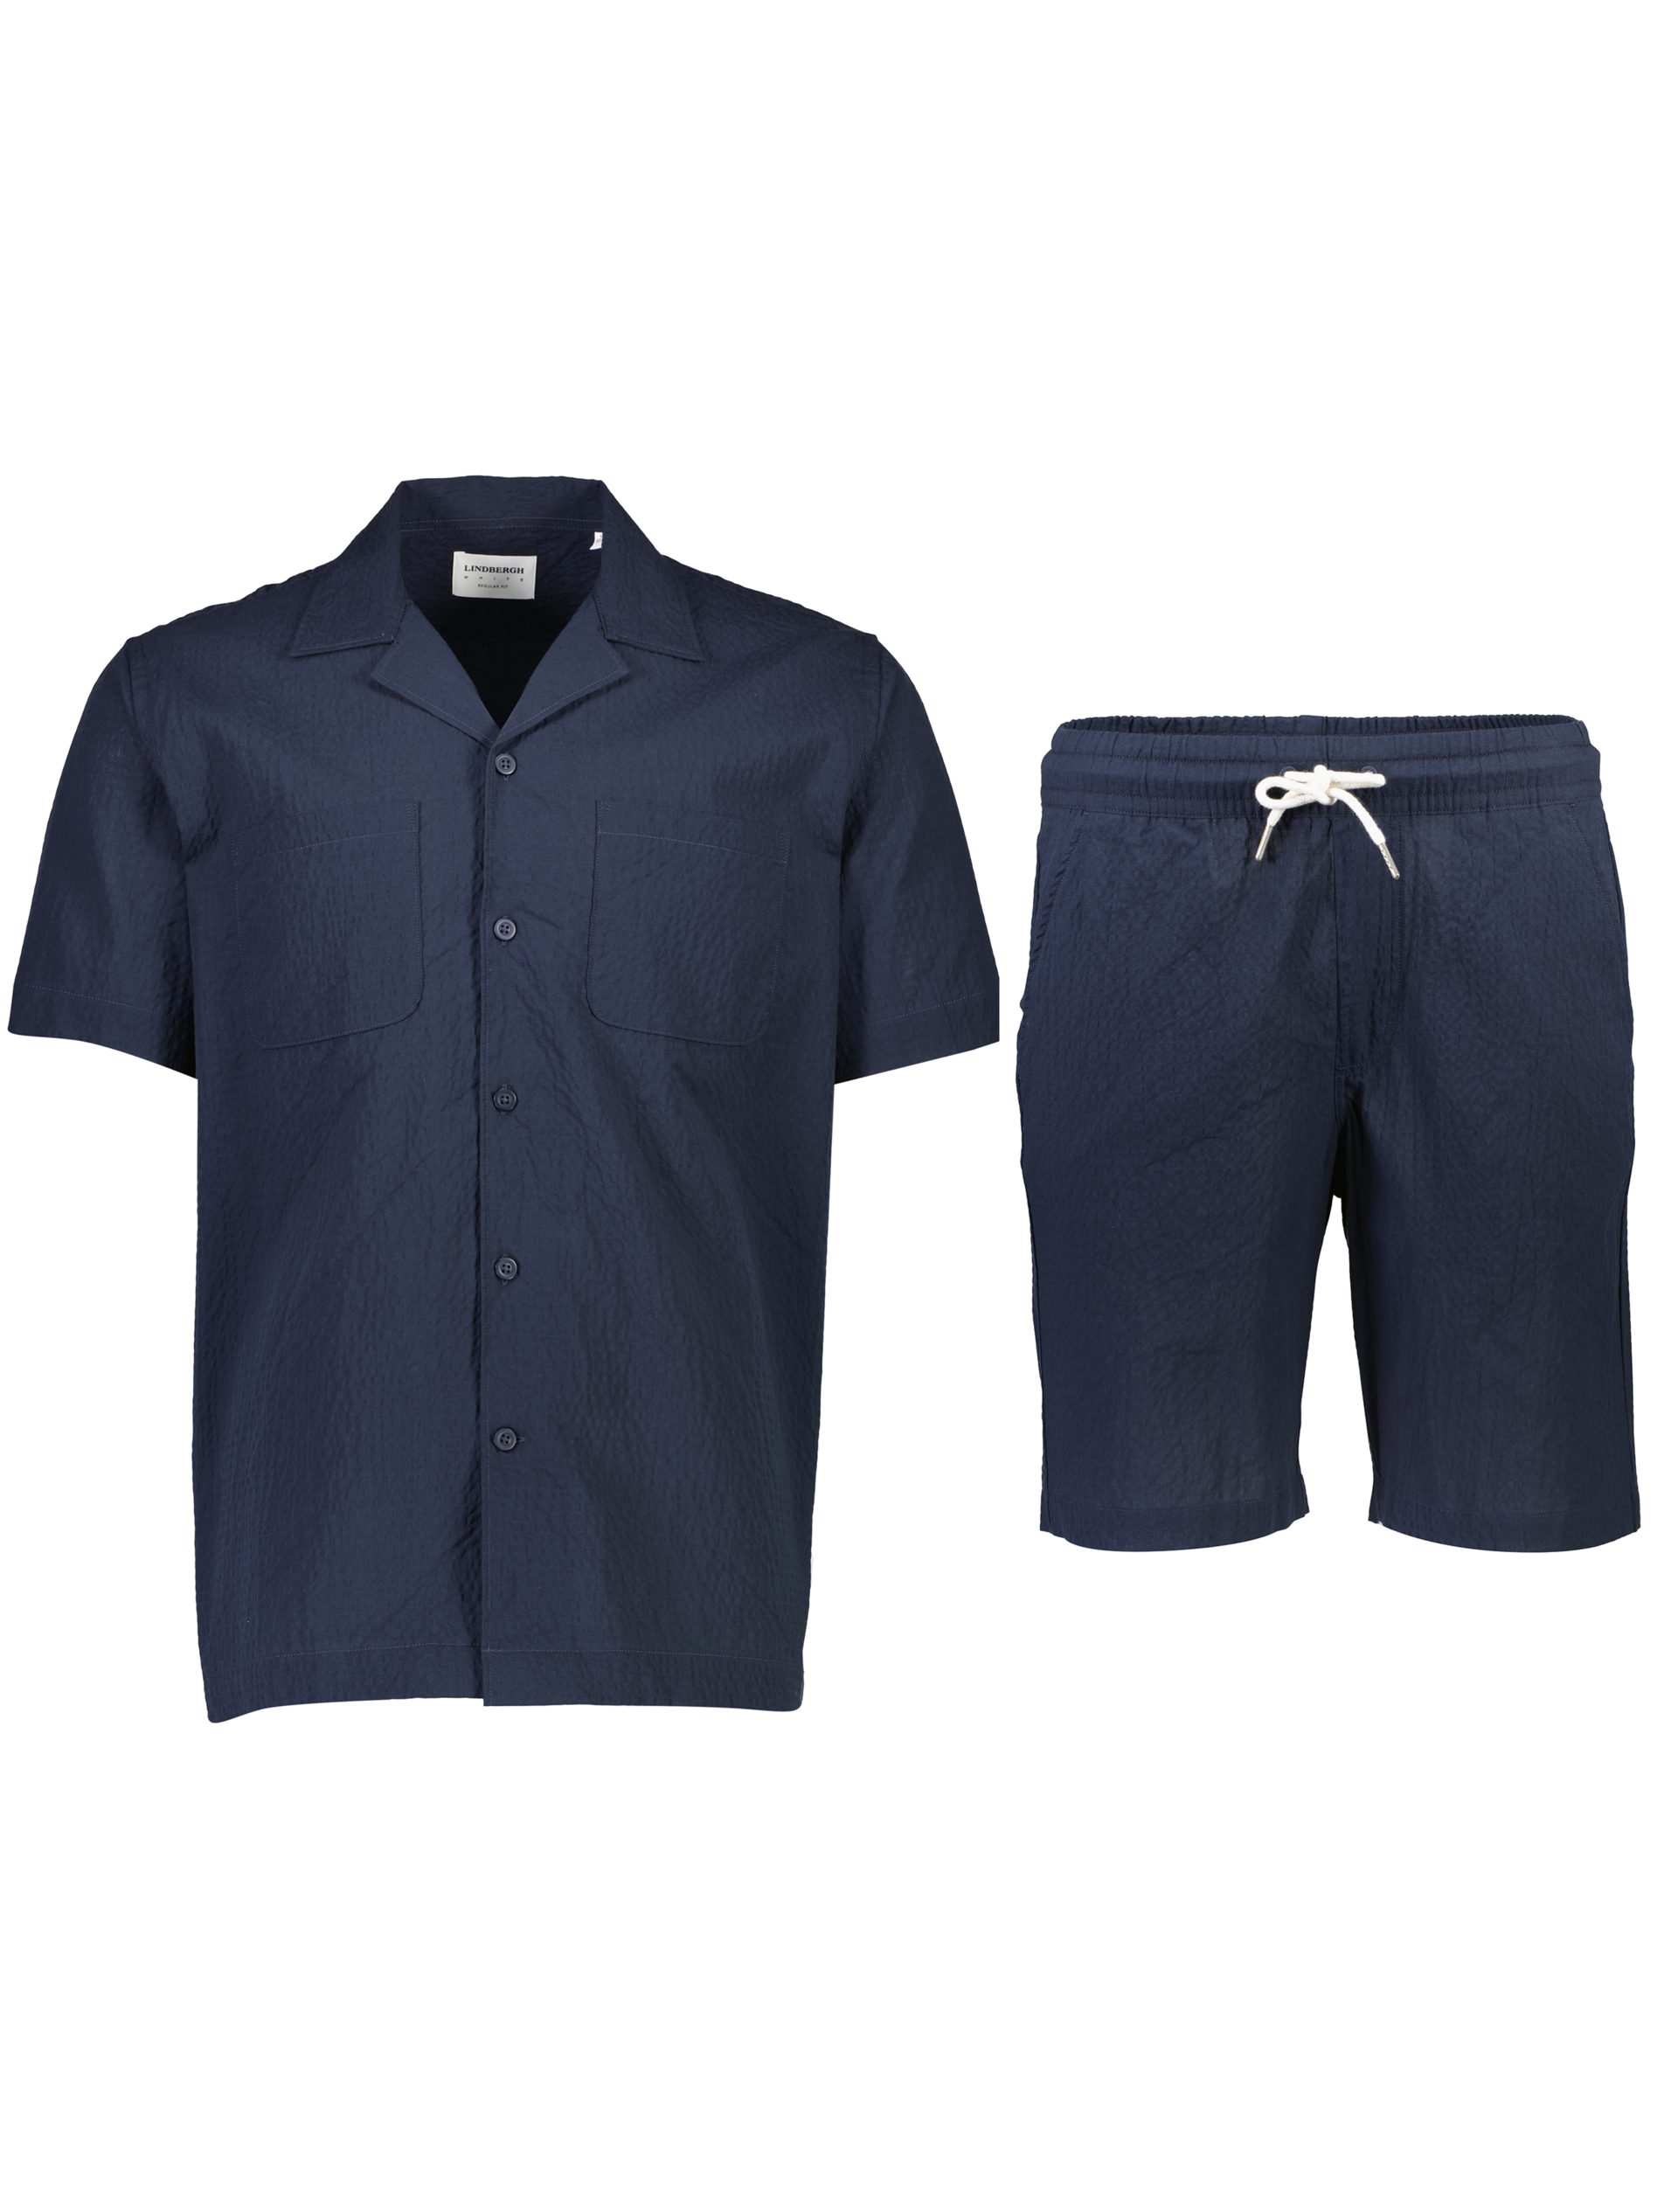 Lindbergh Casual shirt blue / navy